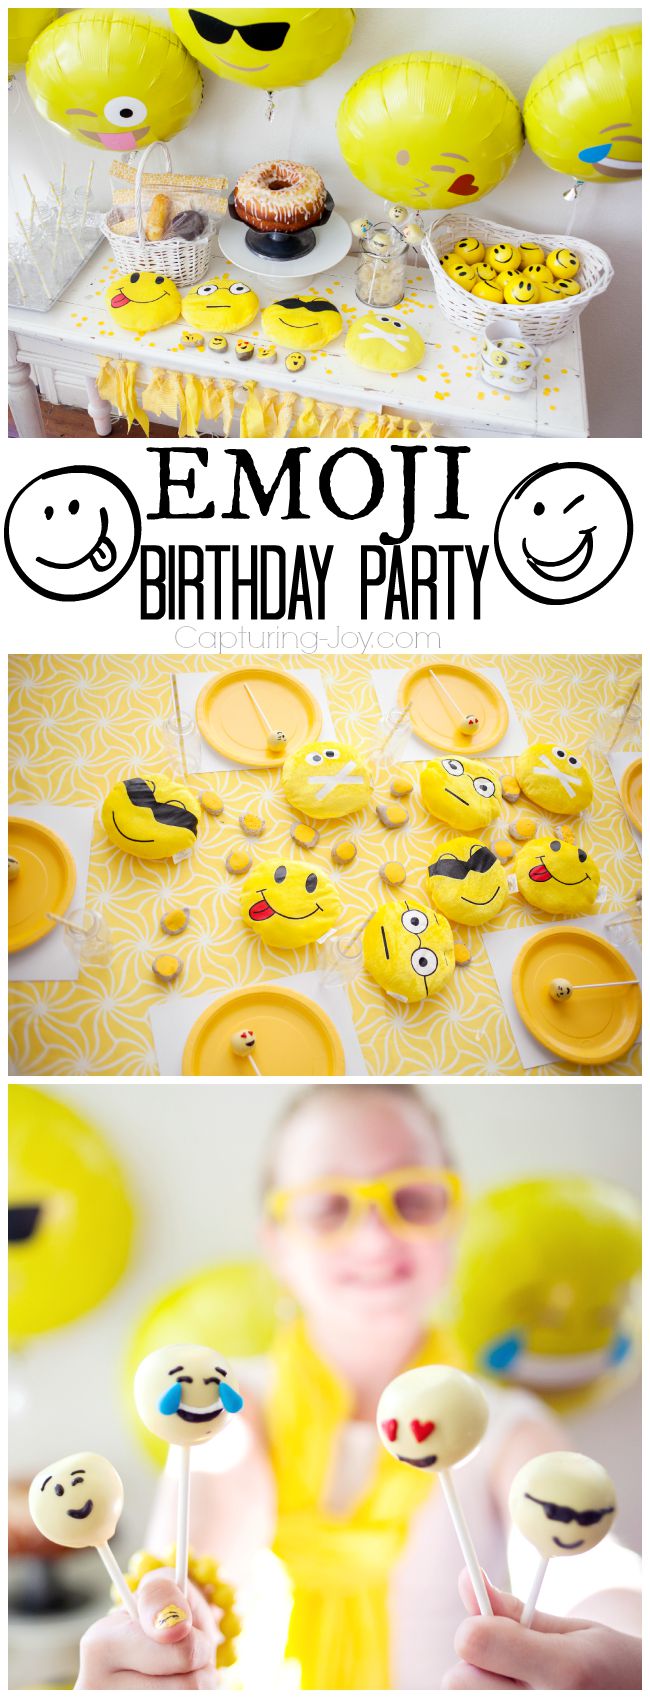 Emoji Birthday Party with Happy Face Emoticons